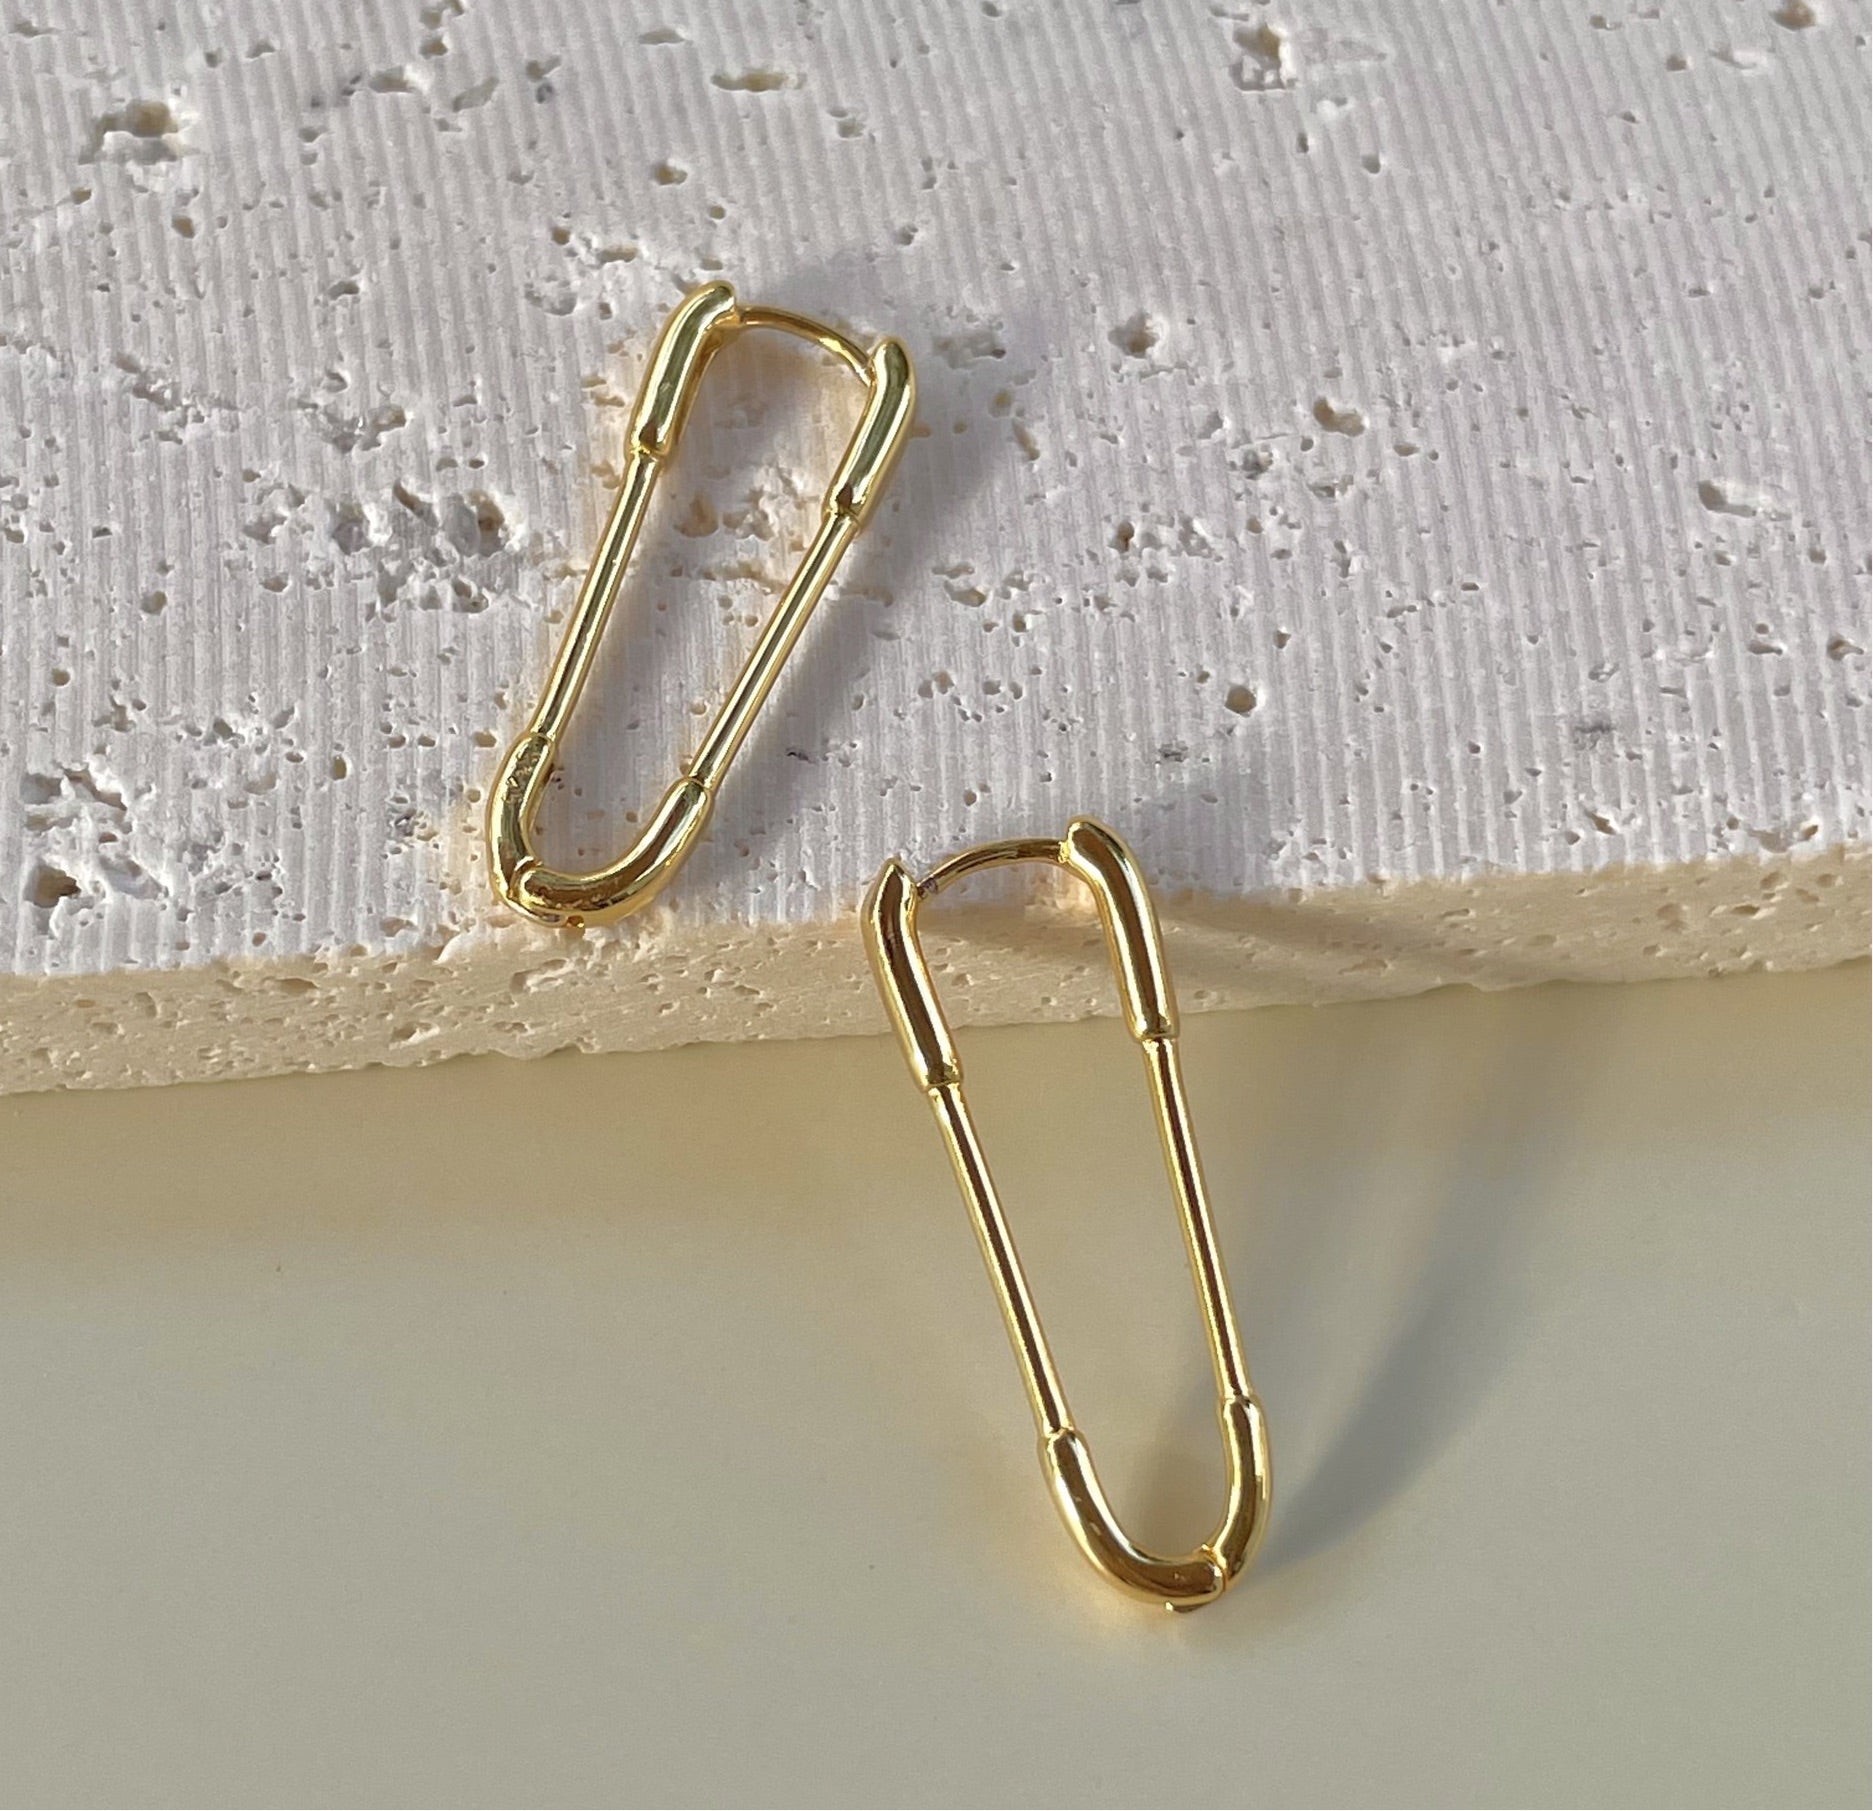 18k gold plated safety pin earrings, Sydney Australia 